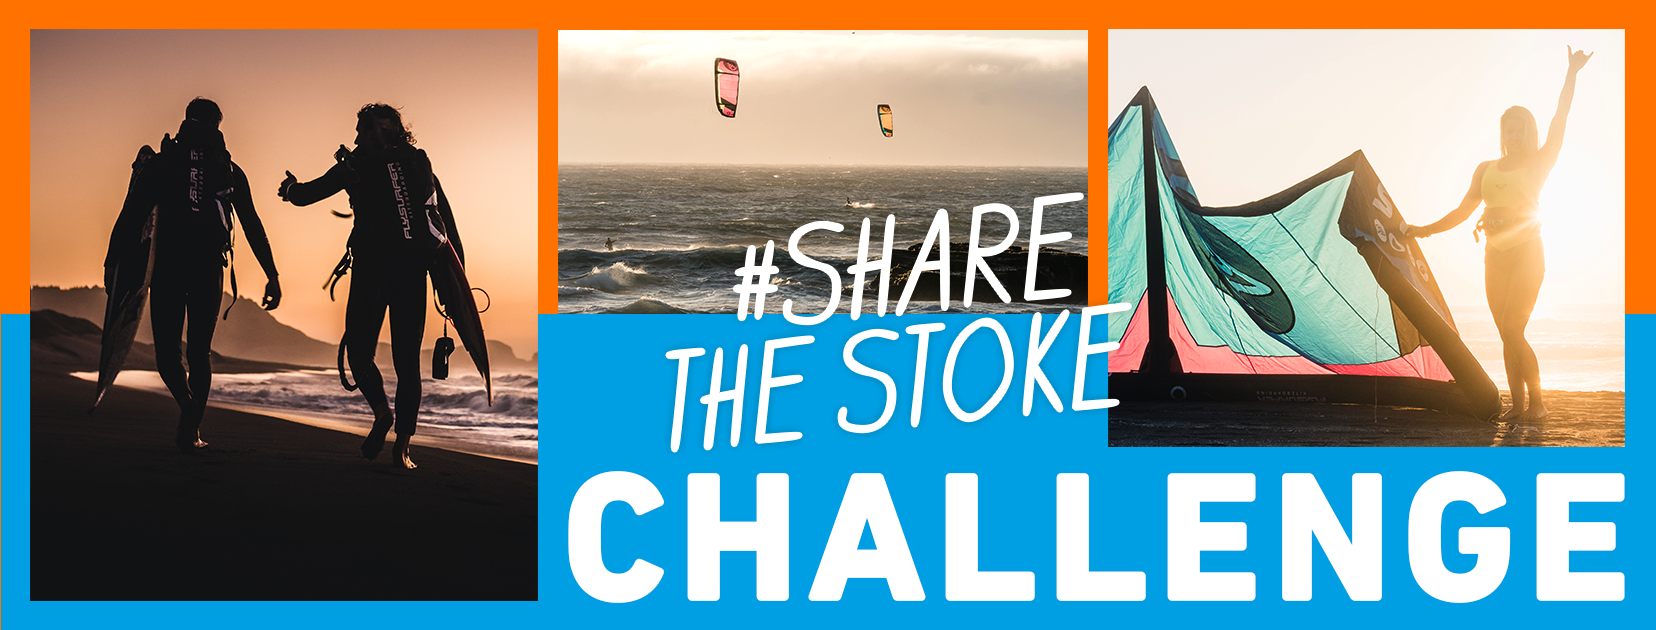 #sharethestoke Challenge